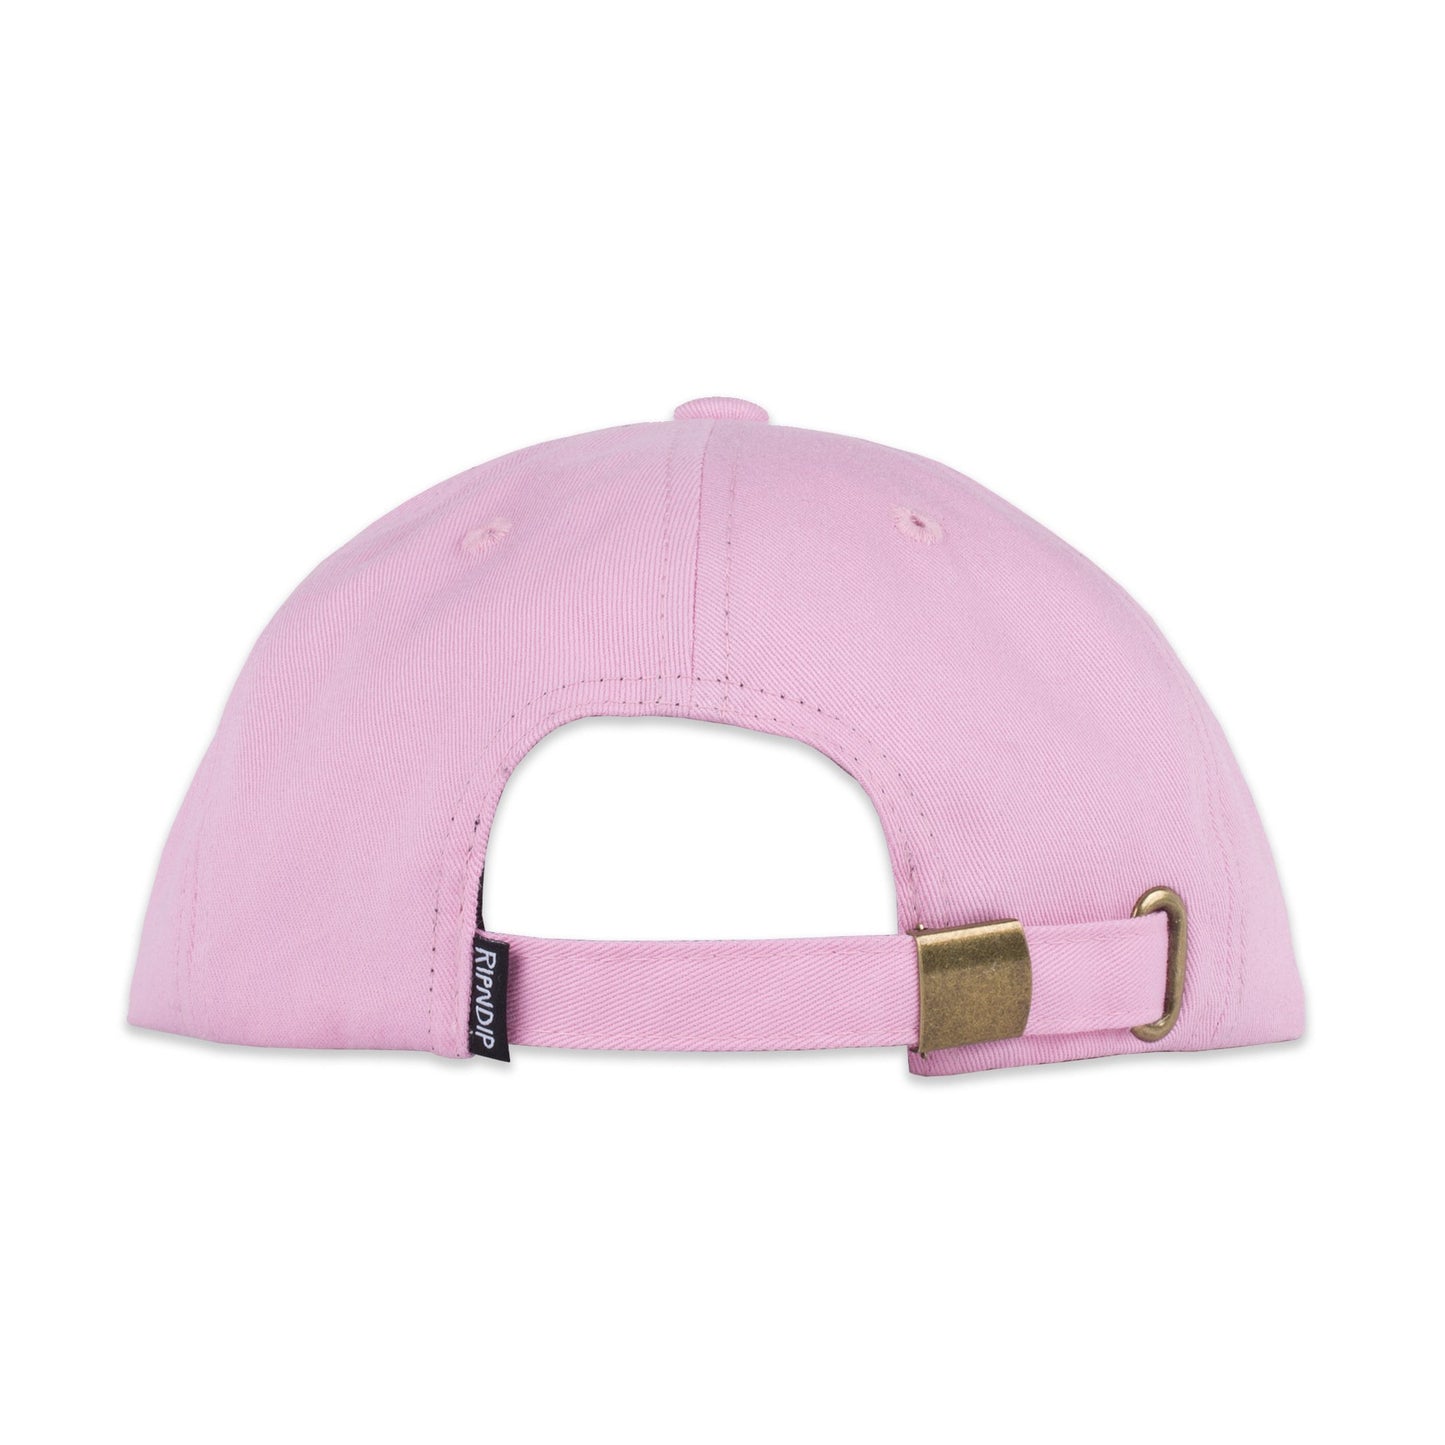 RIPNDIP - Nermcasso Strapback Hat, Pink - The Giant Peach